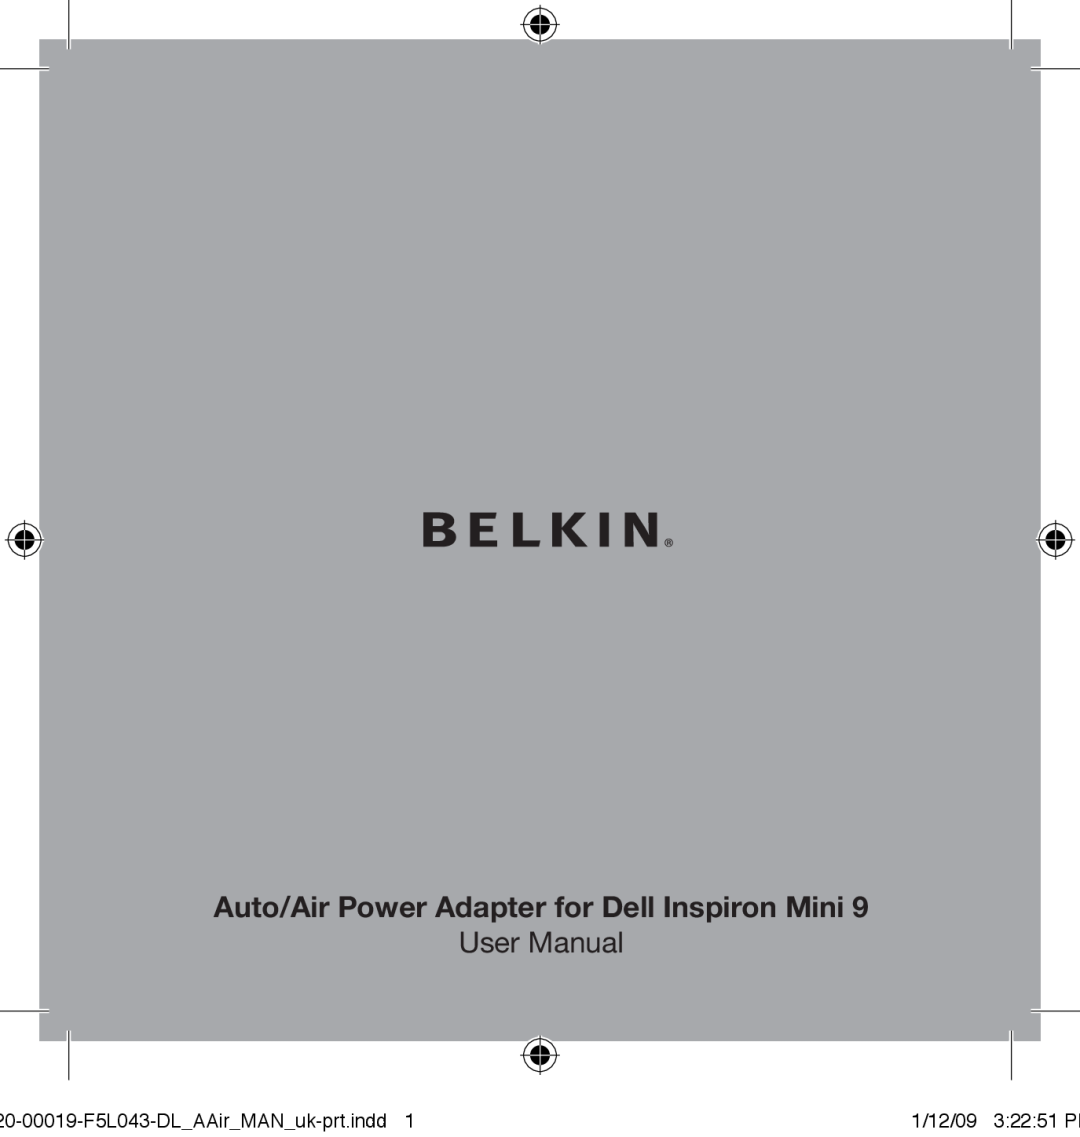 Belkin 0-00019-F5L043 user manual Auto/Air Power Adapter for Dell Inspiron Mini 